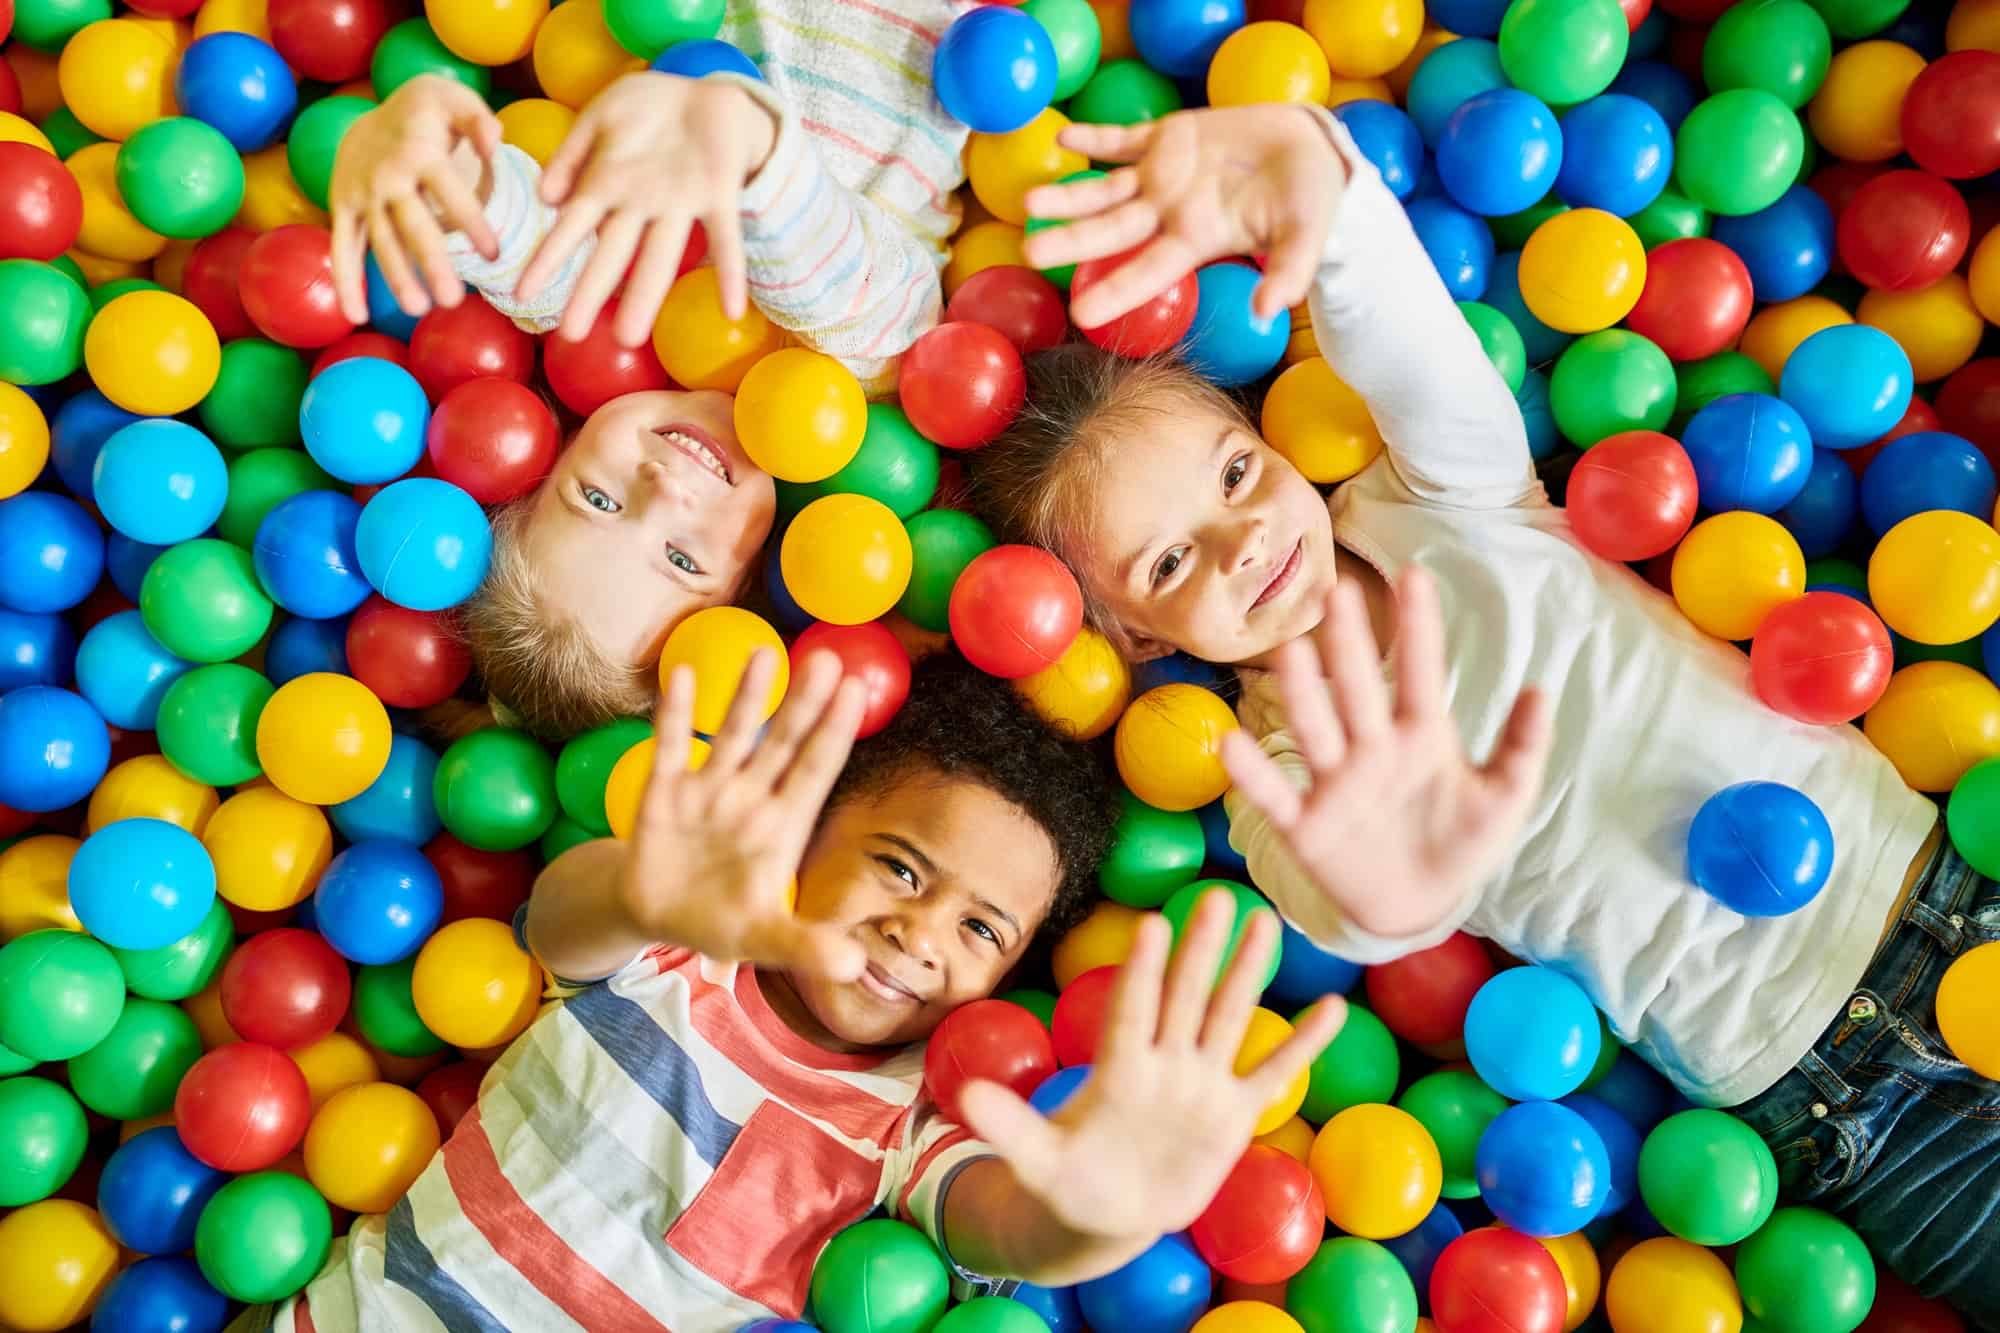 Paediatric Occupational Therapy Interventions: Nurturing Child Development Through Purposeful Play